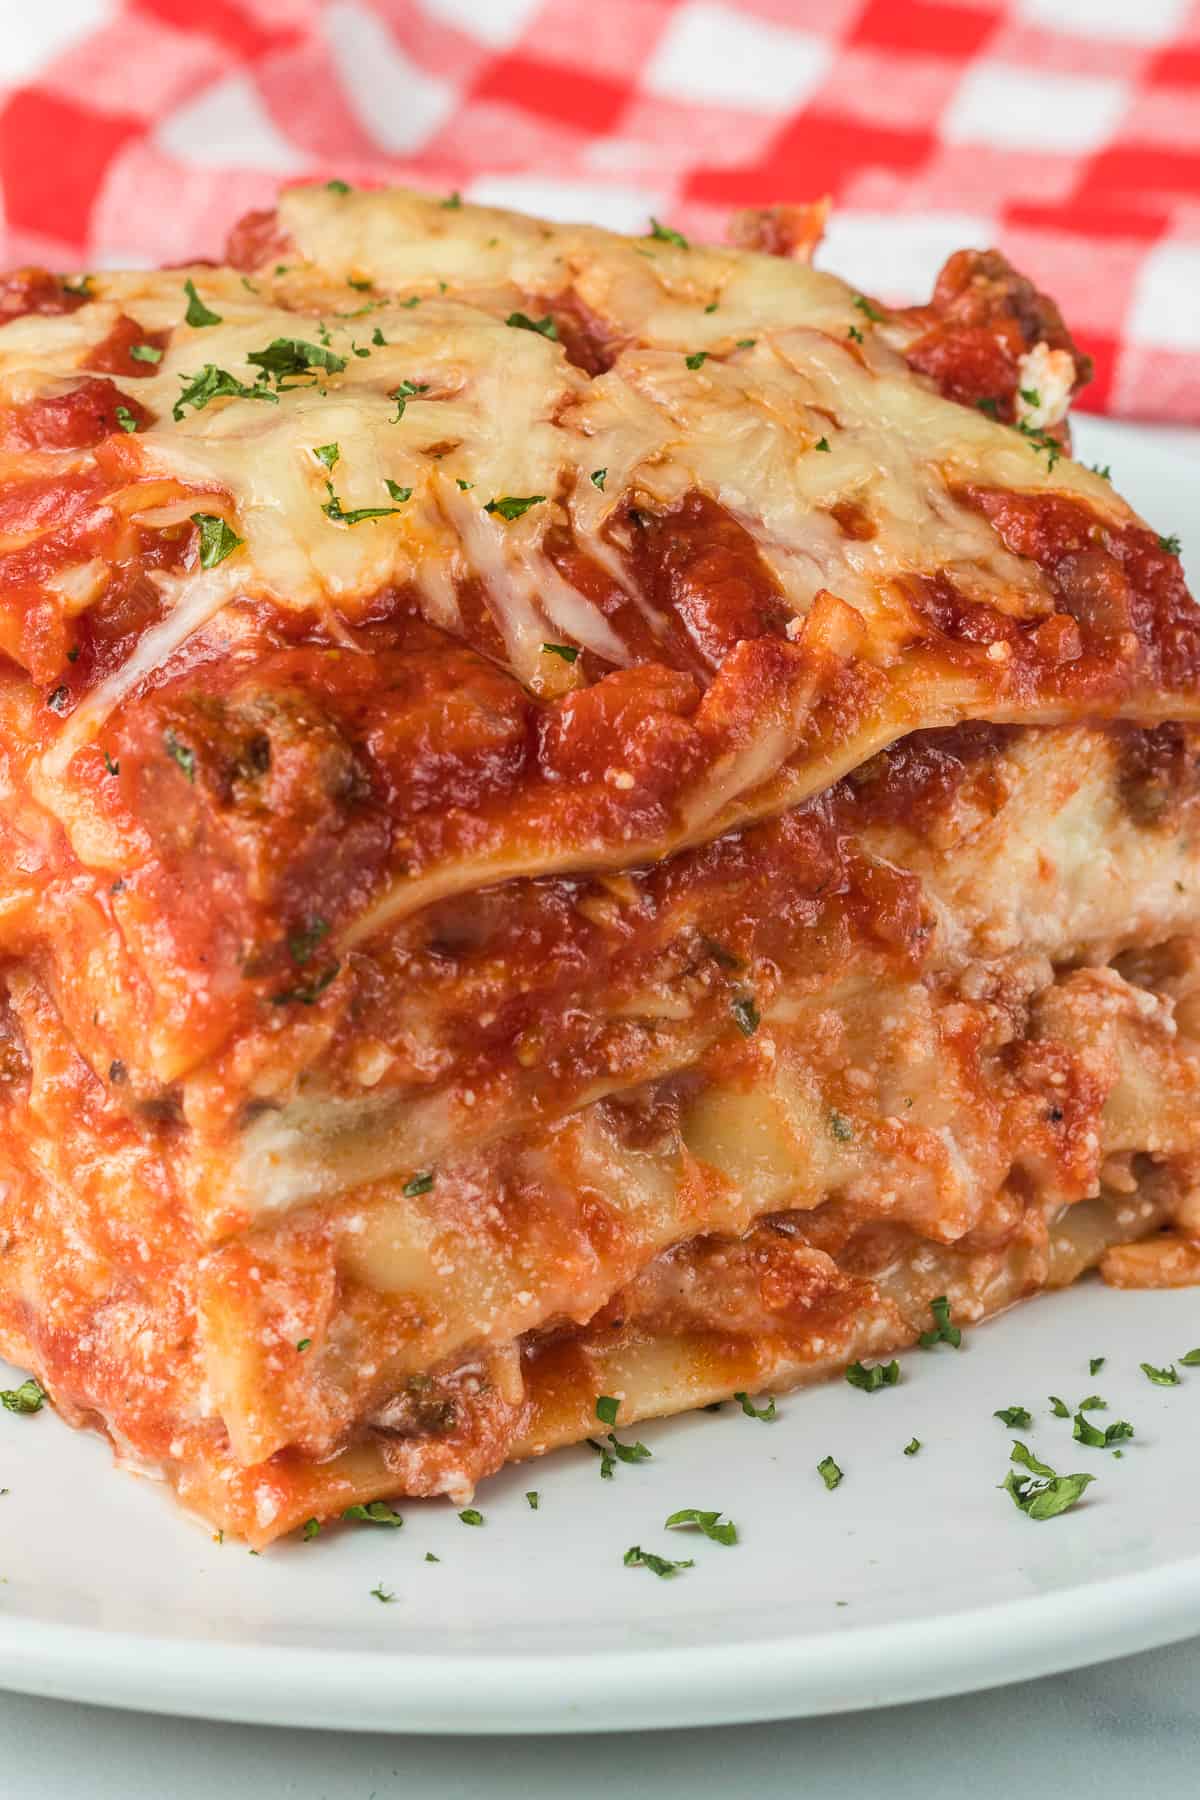 Mom's Lasagna Recipe {Comfort Food} | 365 Days of Baking